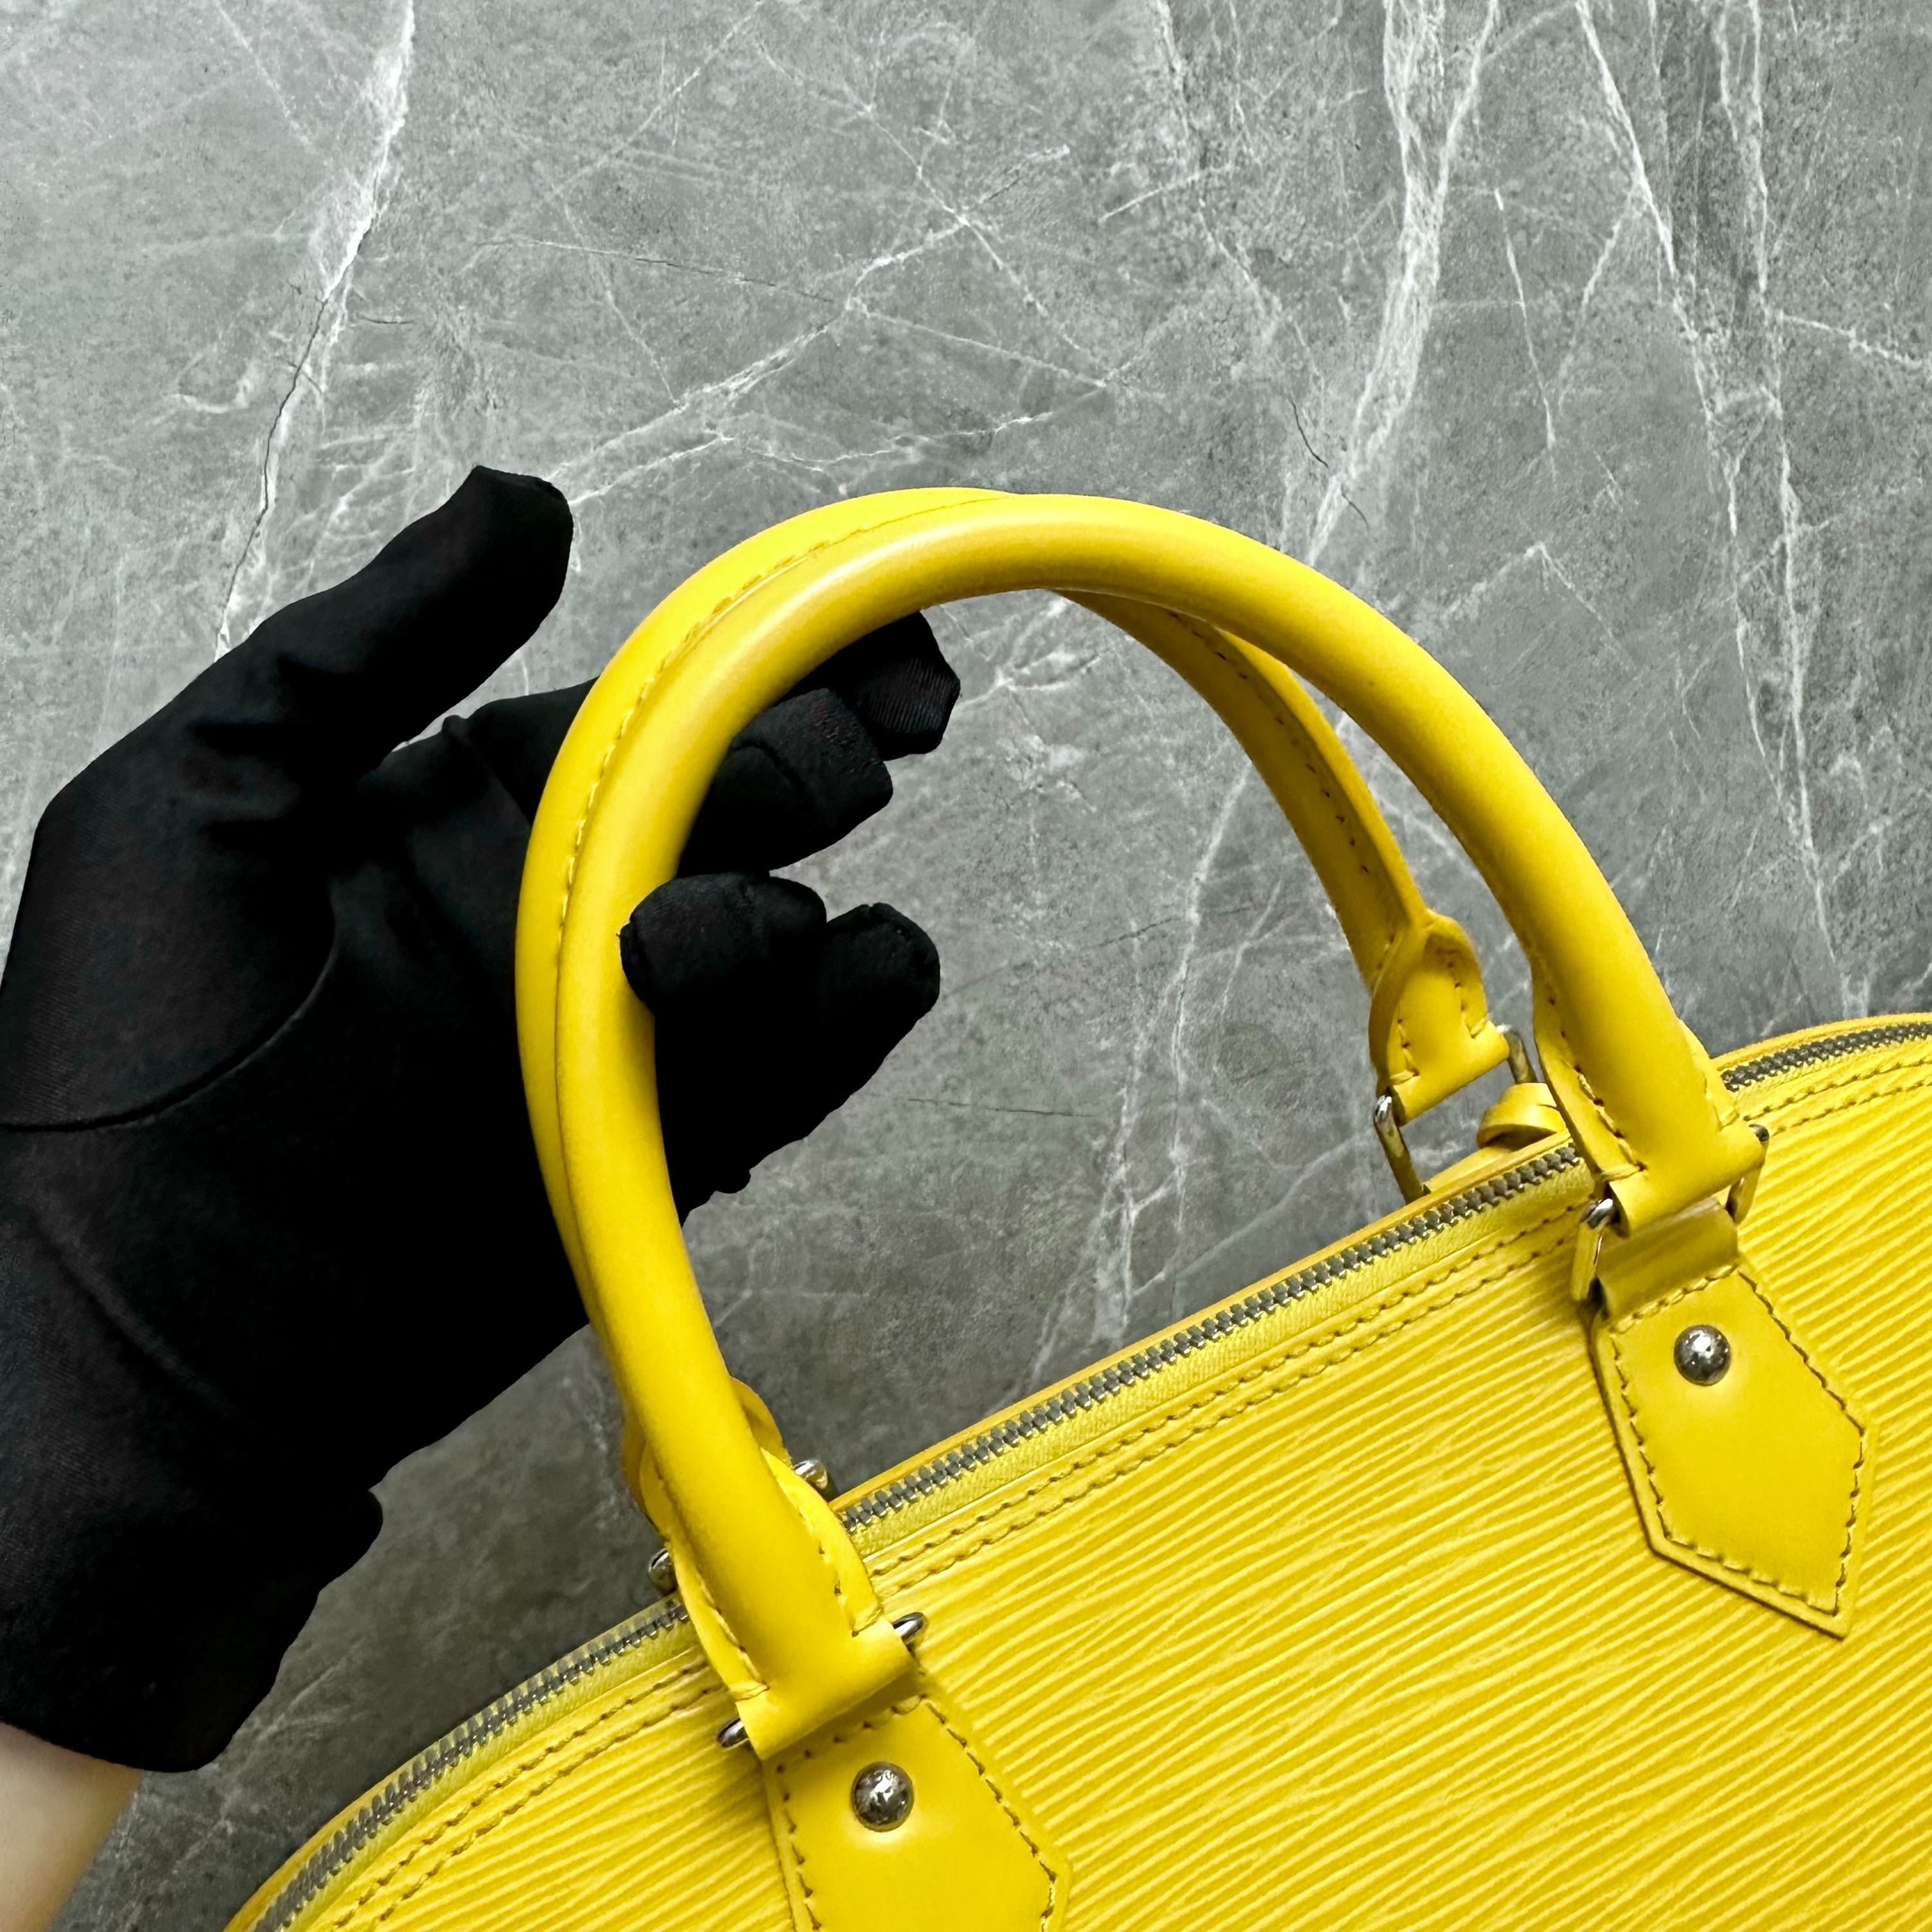 LOUIS VUITTON Sac Plat GM Hand Bag Epi Leather Yellow Citron